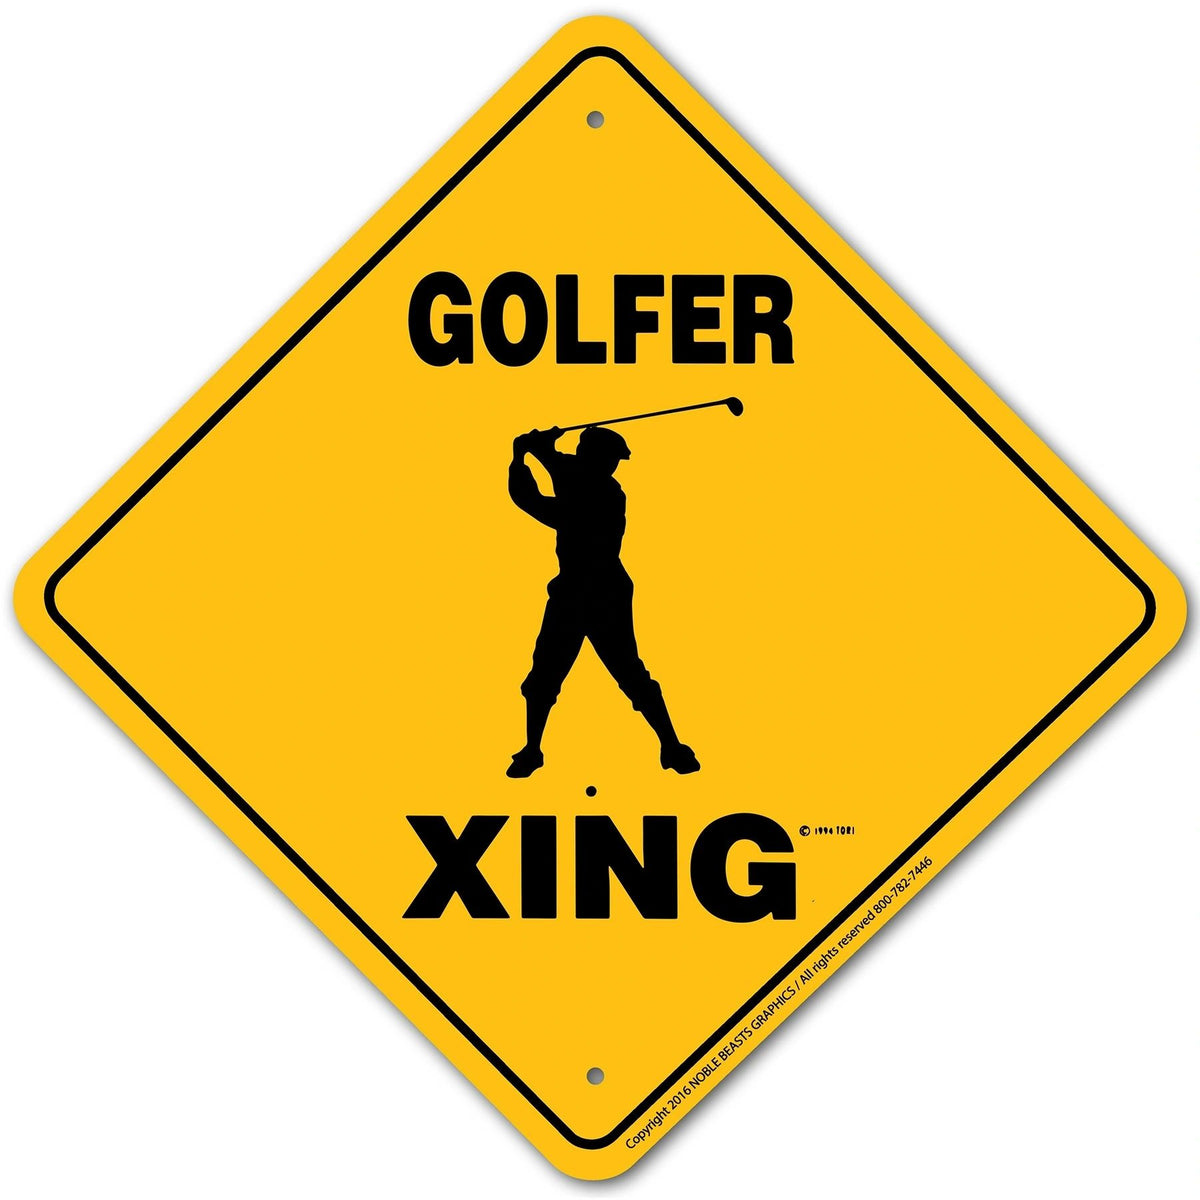 Golfer (Male) Xing Sign Aluminum 12 in X 12 in #20782